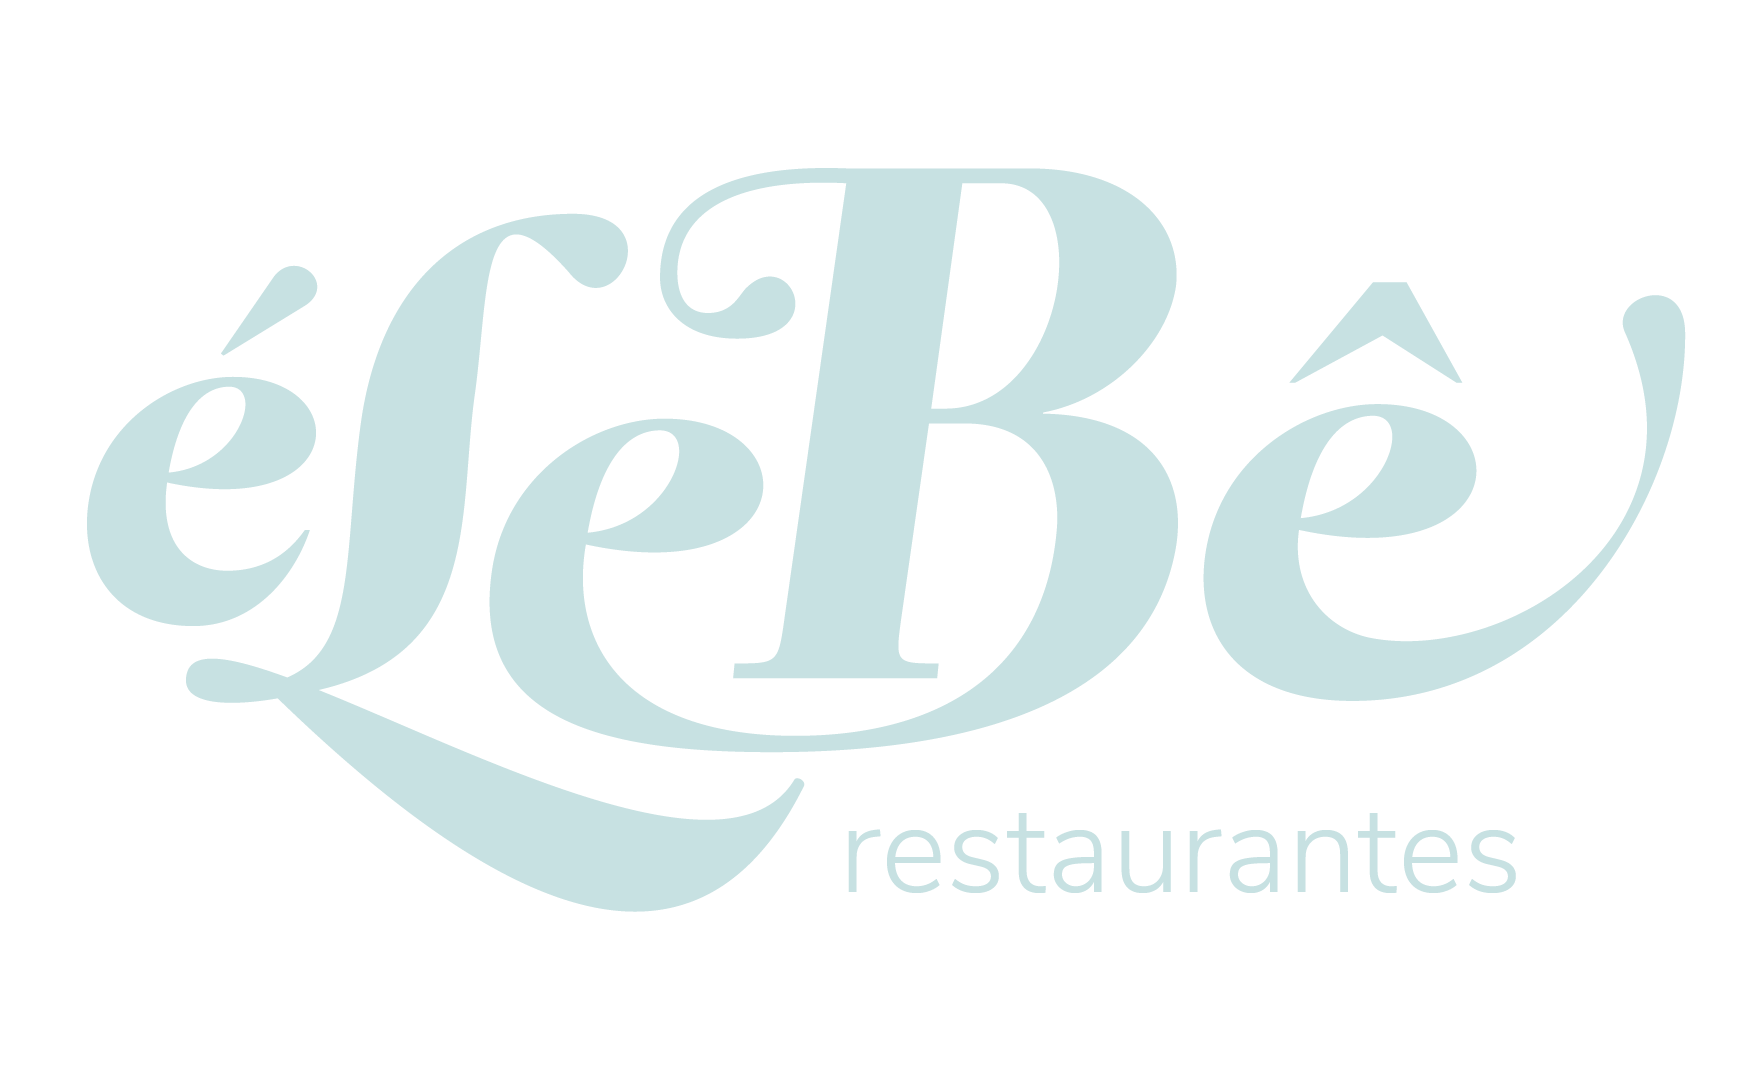 éLeBê Restaurantes